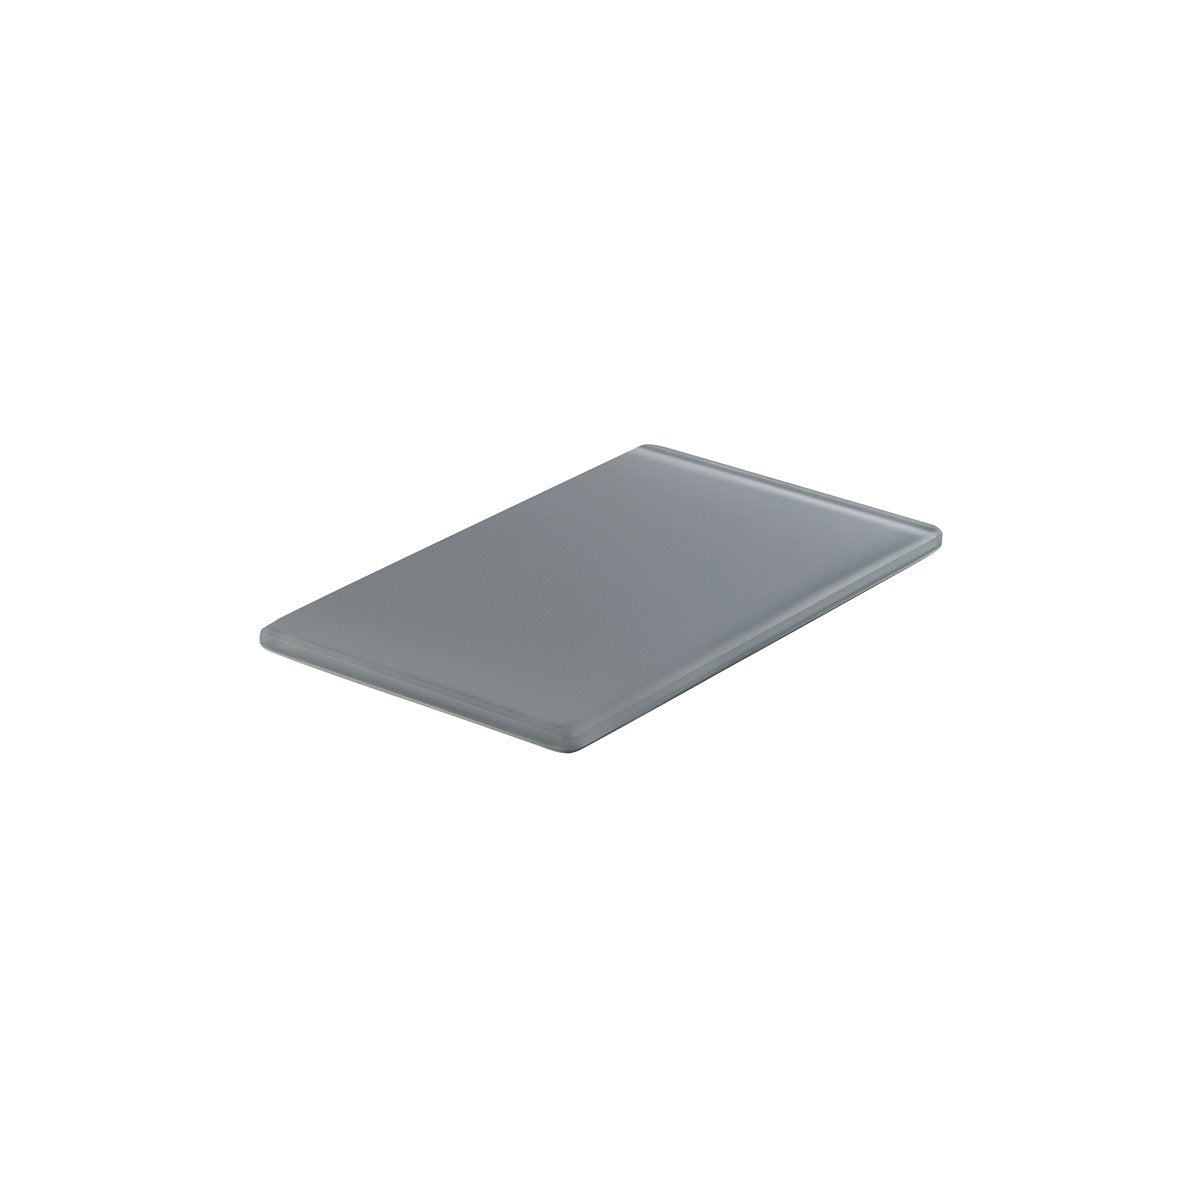 MLP115871 Mealplak 1/4 Size Tray Concrete 265x162x10mm Tomkin Australia Hospitality Supplies